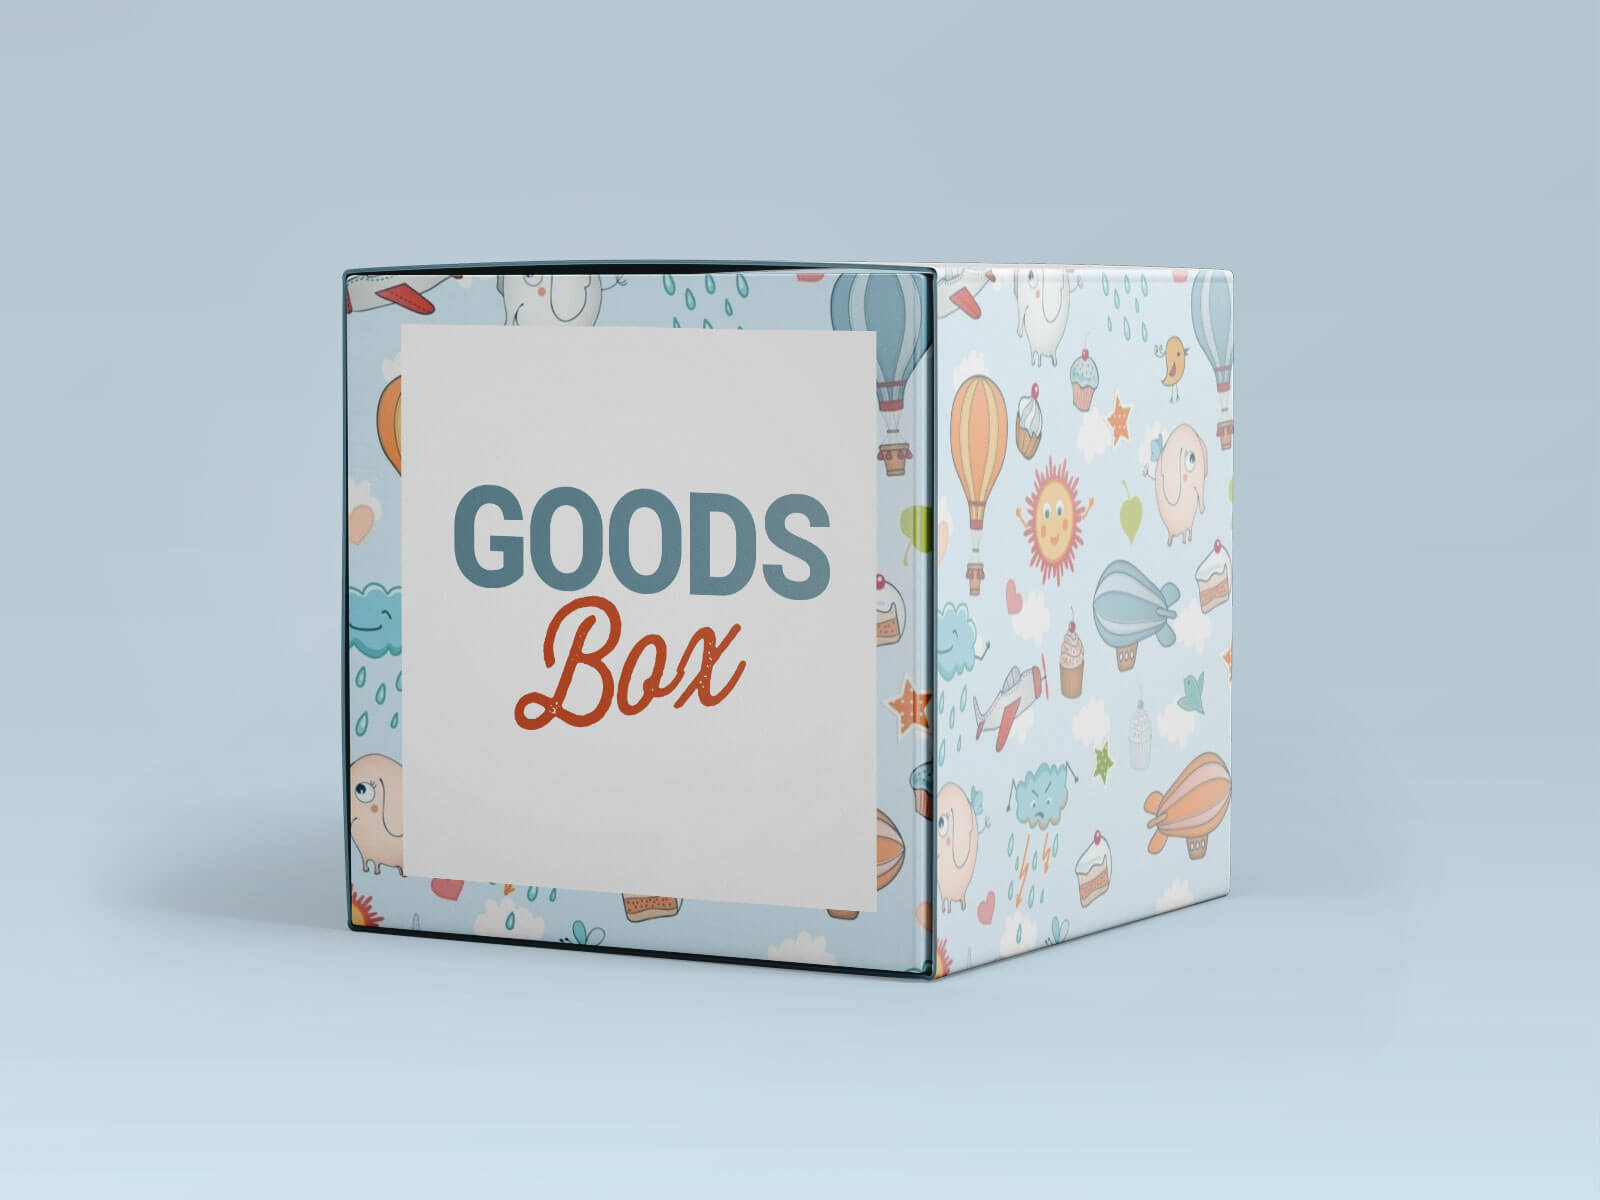 Goods / Storage Box Packaging Mockup Set